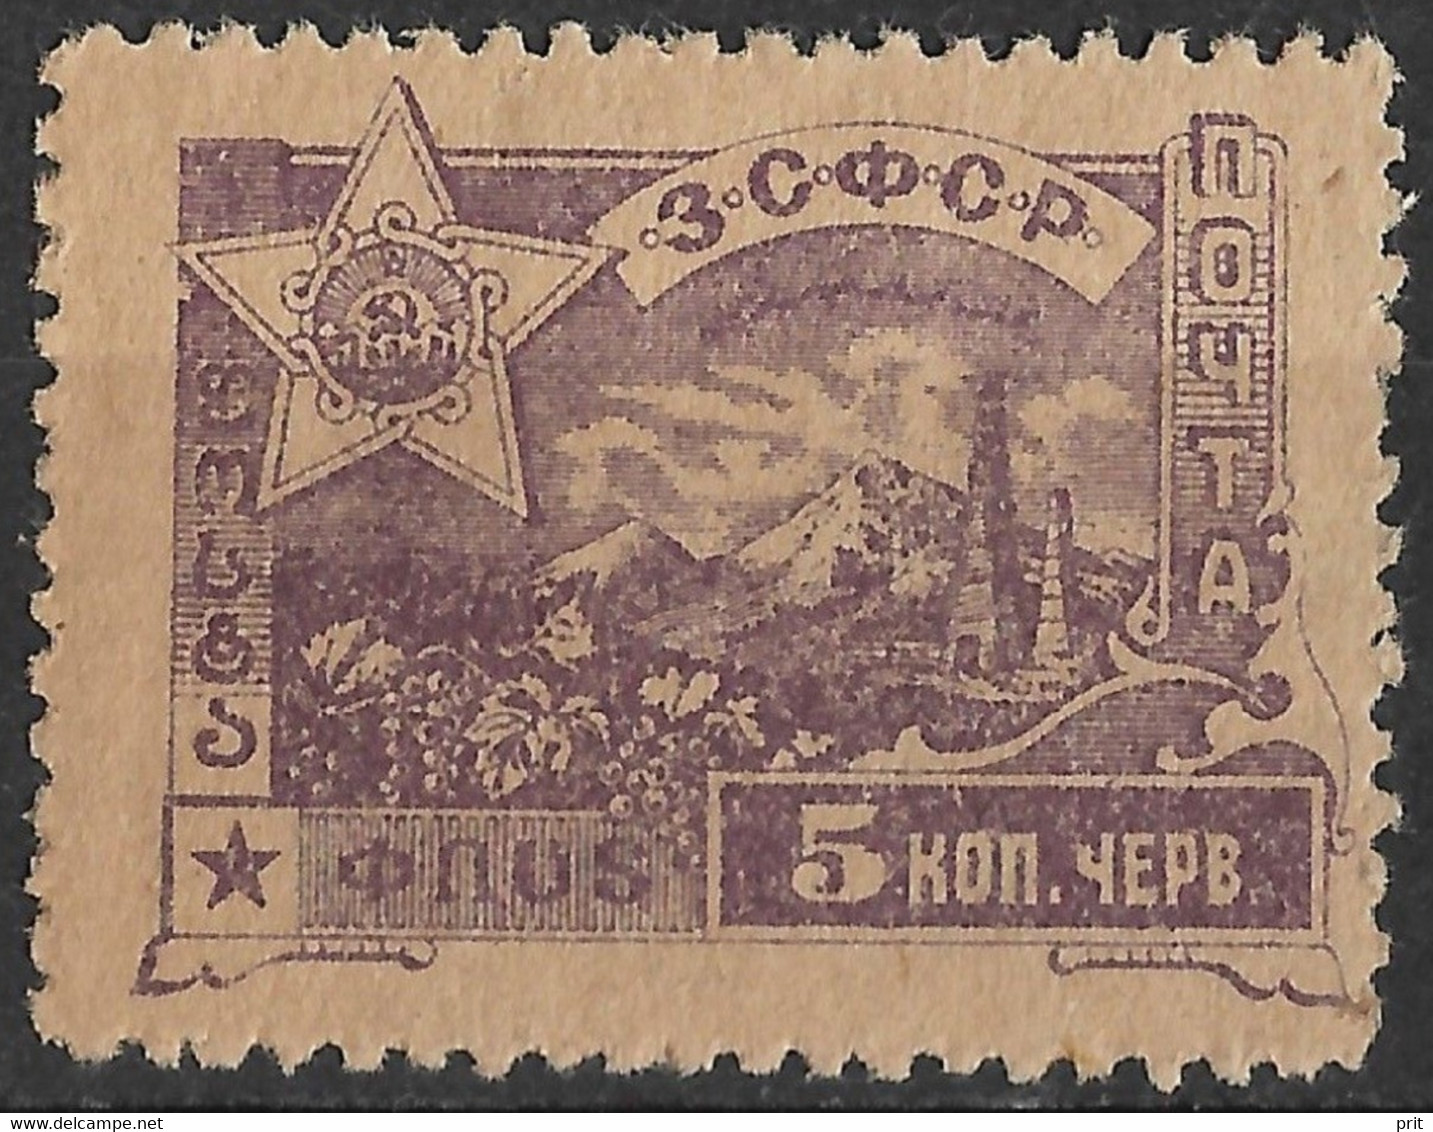 Transcaucasian Federated Republics, Russia 1923 5K Ararat Mountain & Oil Fields. Michel 31. MH. - Russ. Sozialistische Föderative Sowjetrepublik (RSFSR)